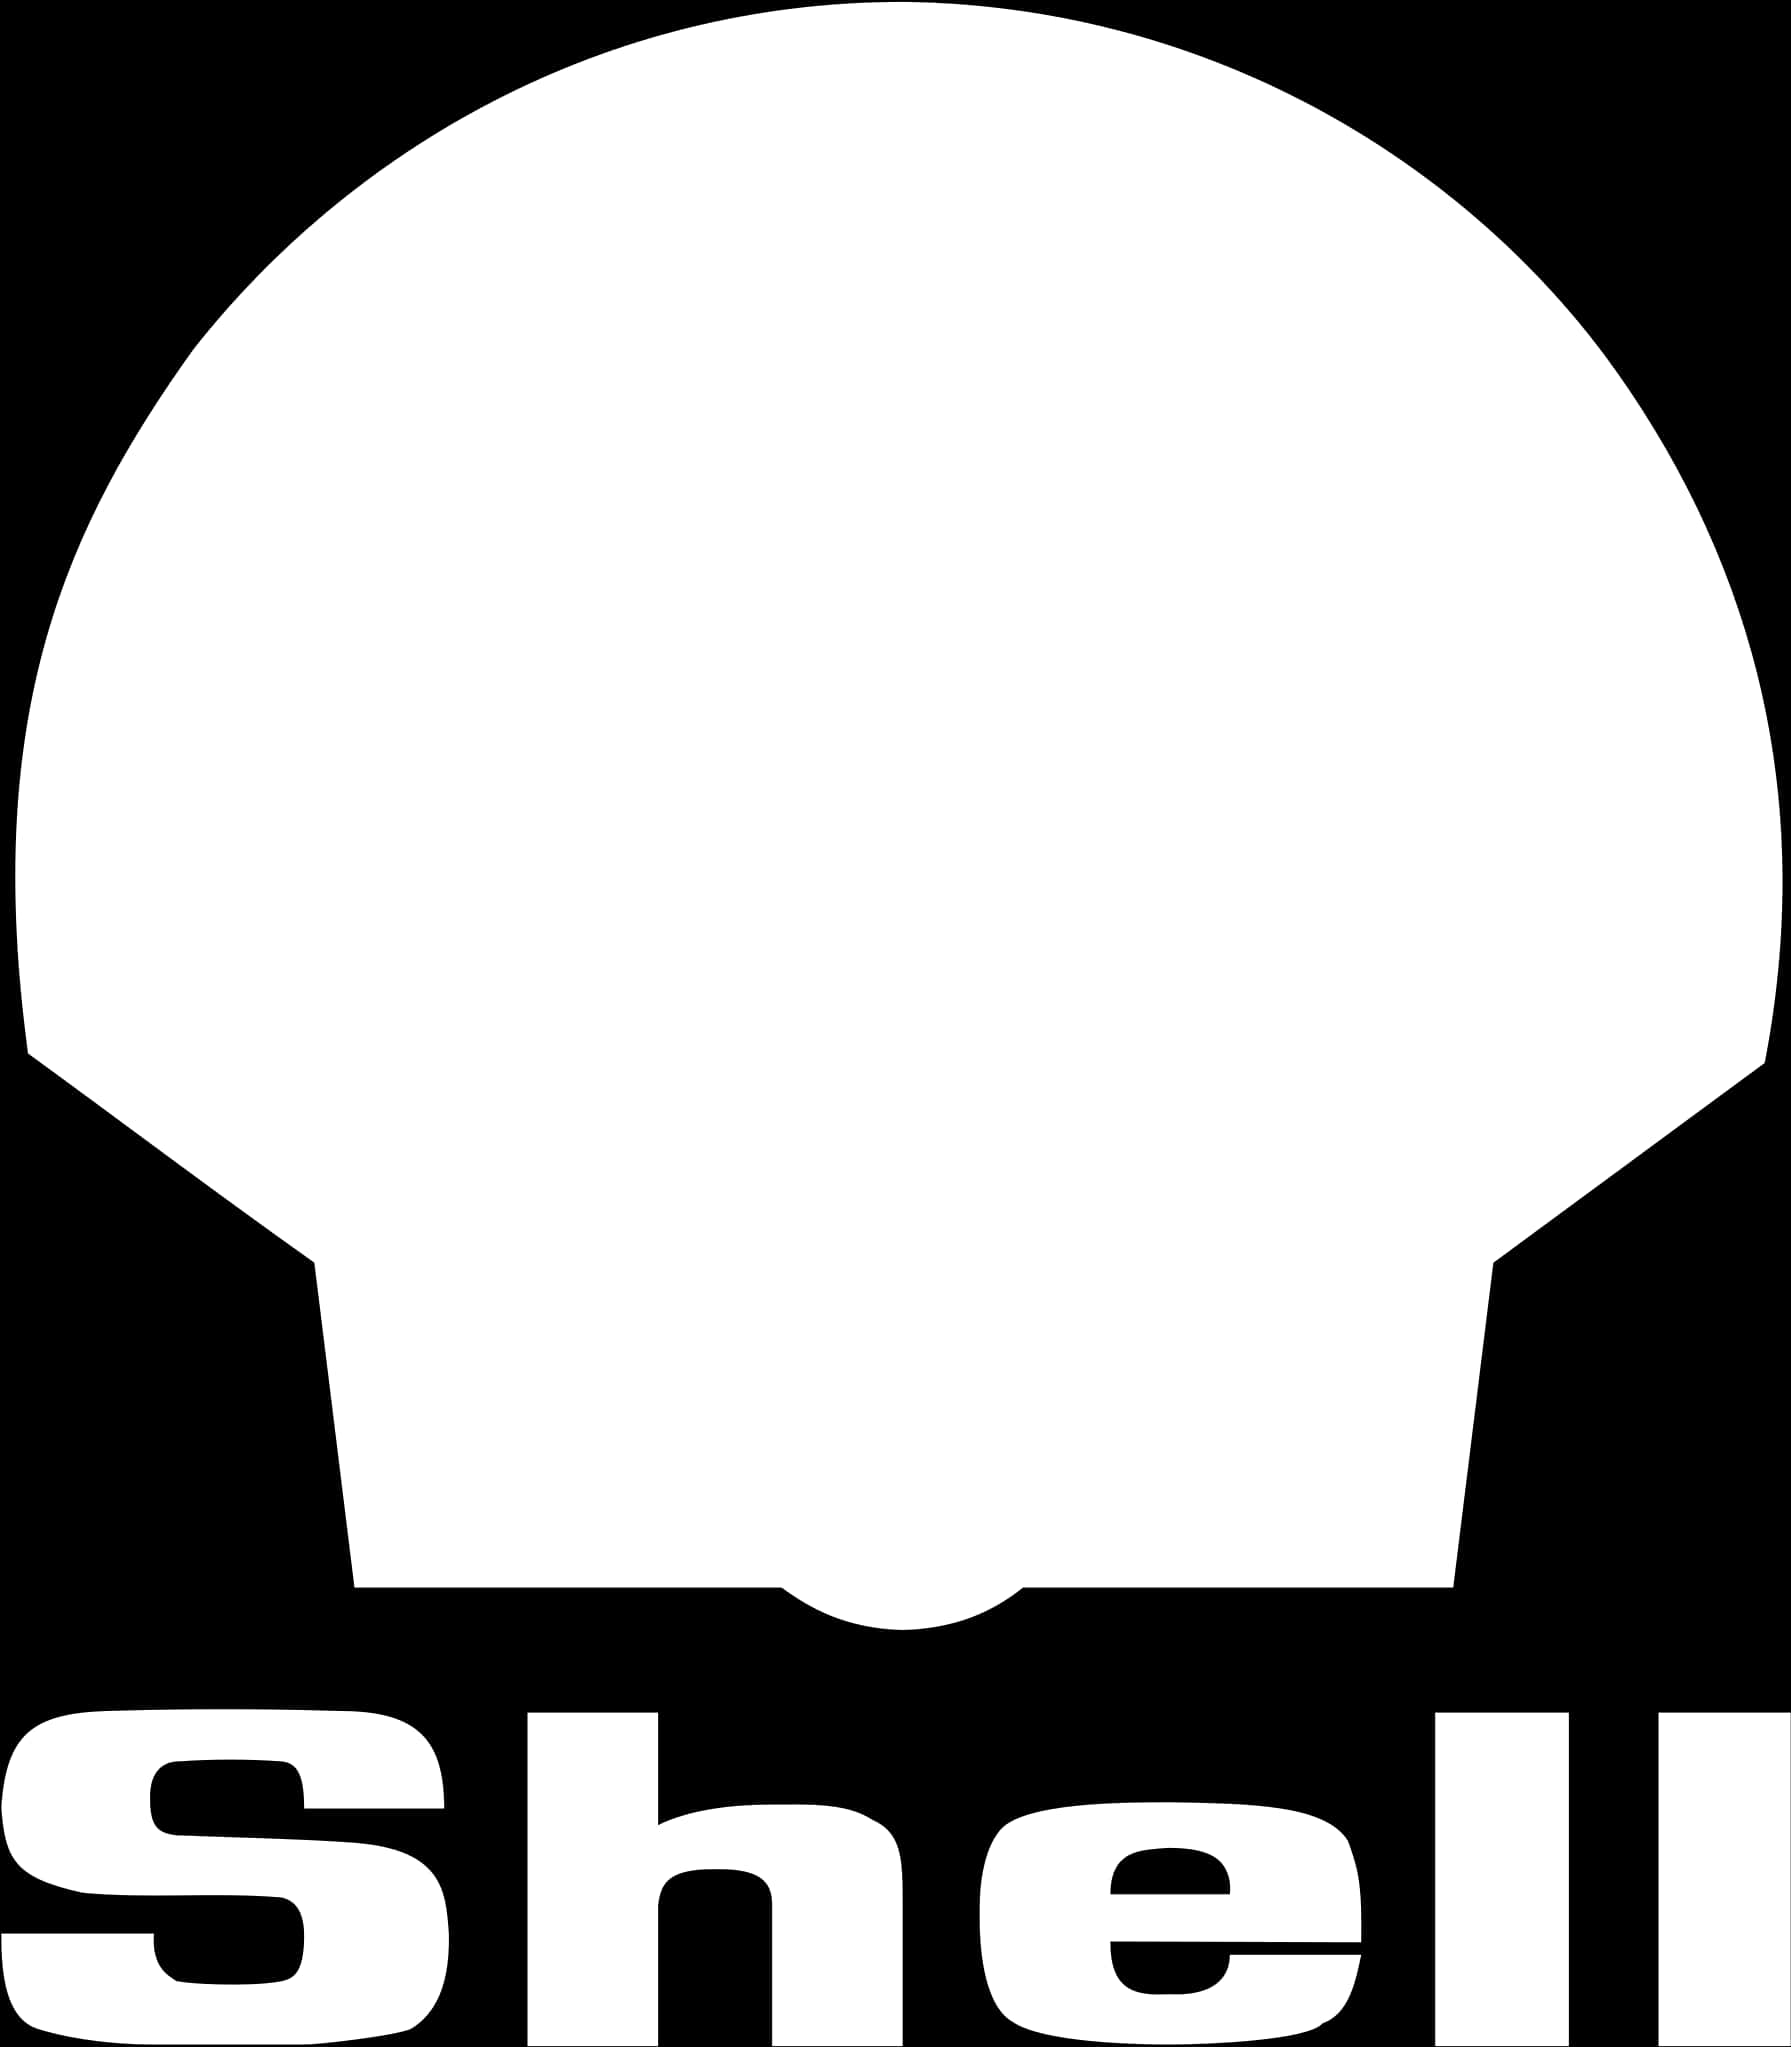 Shell Logo Blackand White